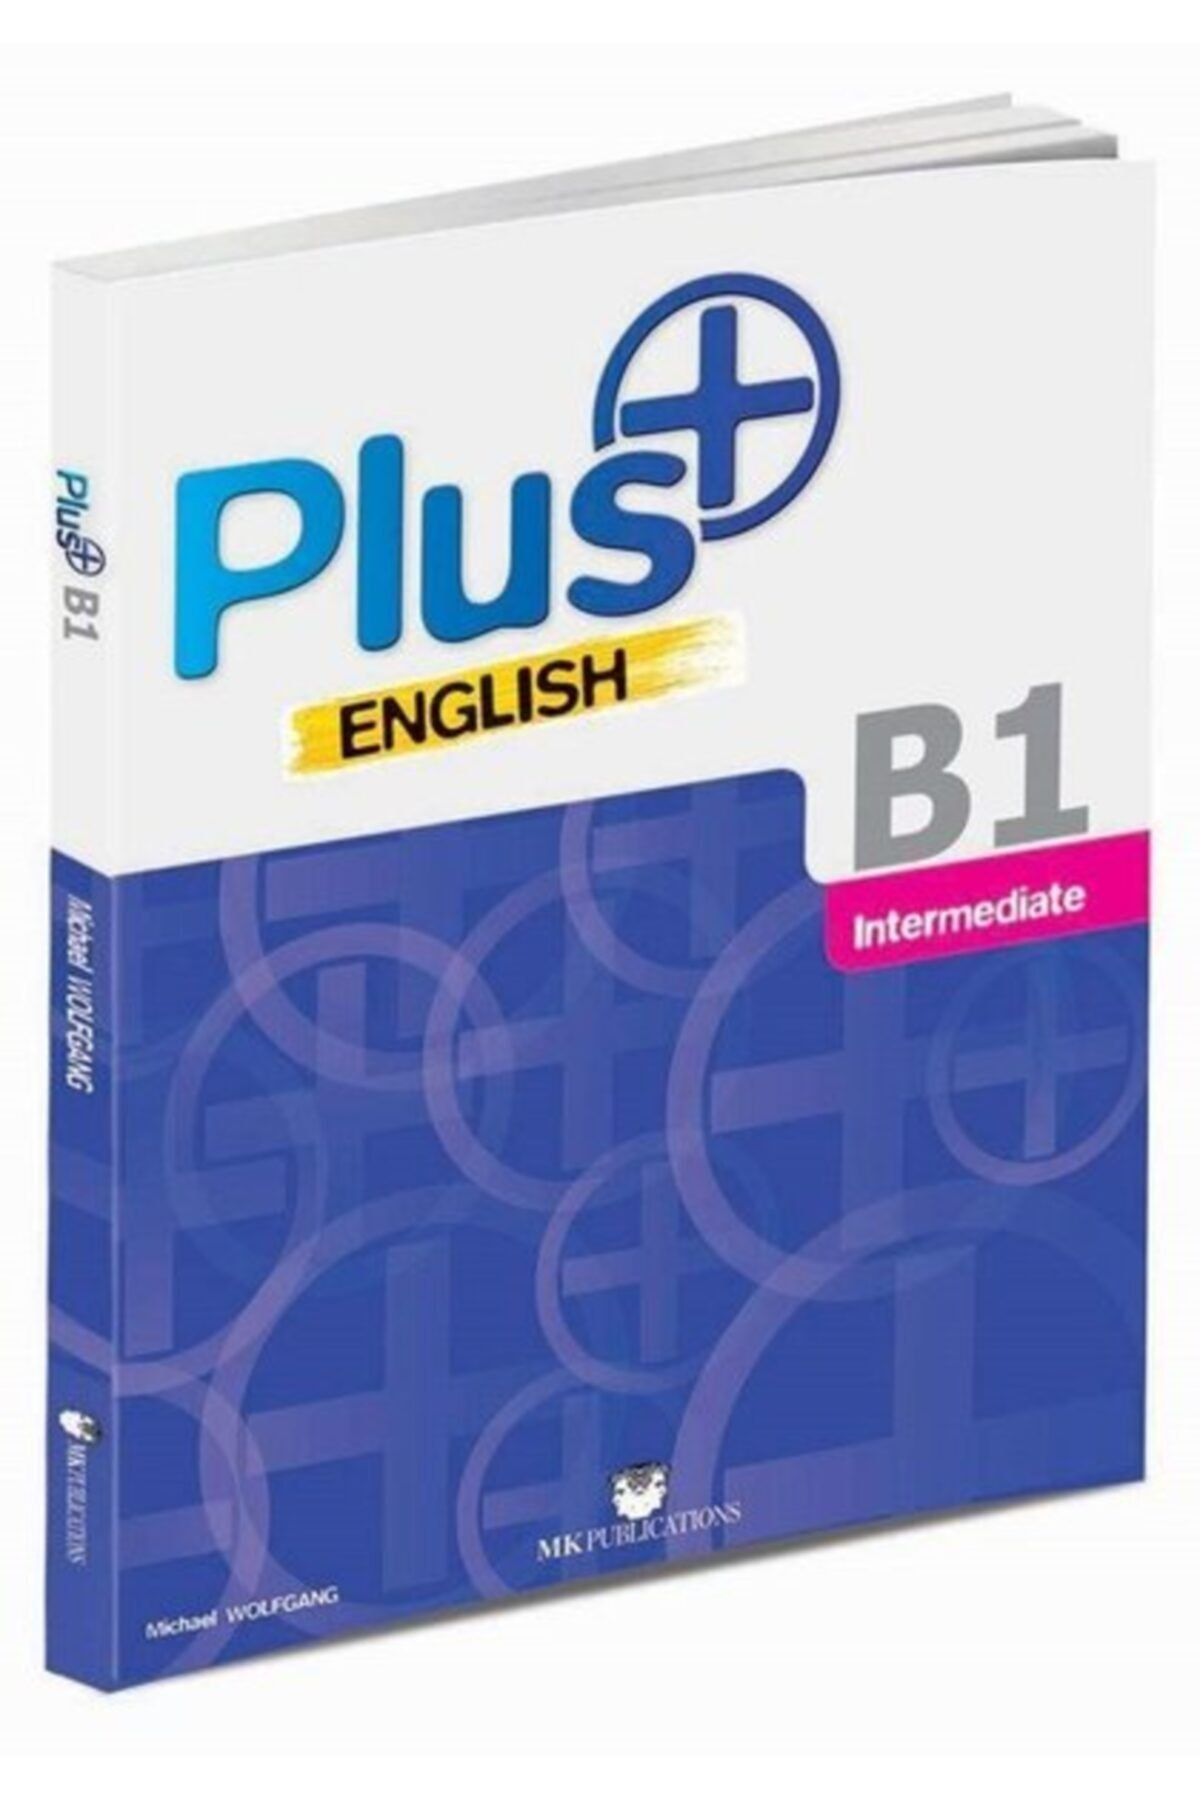 MK Publications - Plus English B1 Intermediate / Micheal Wolfgang